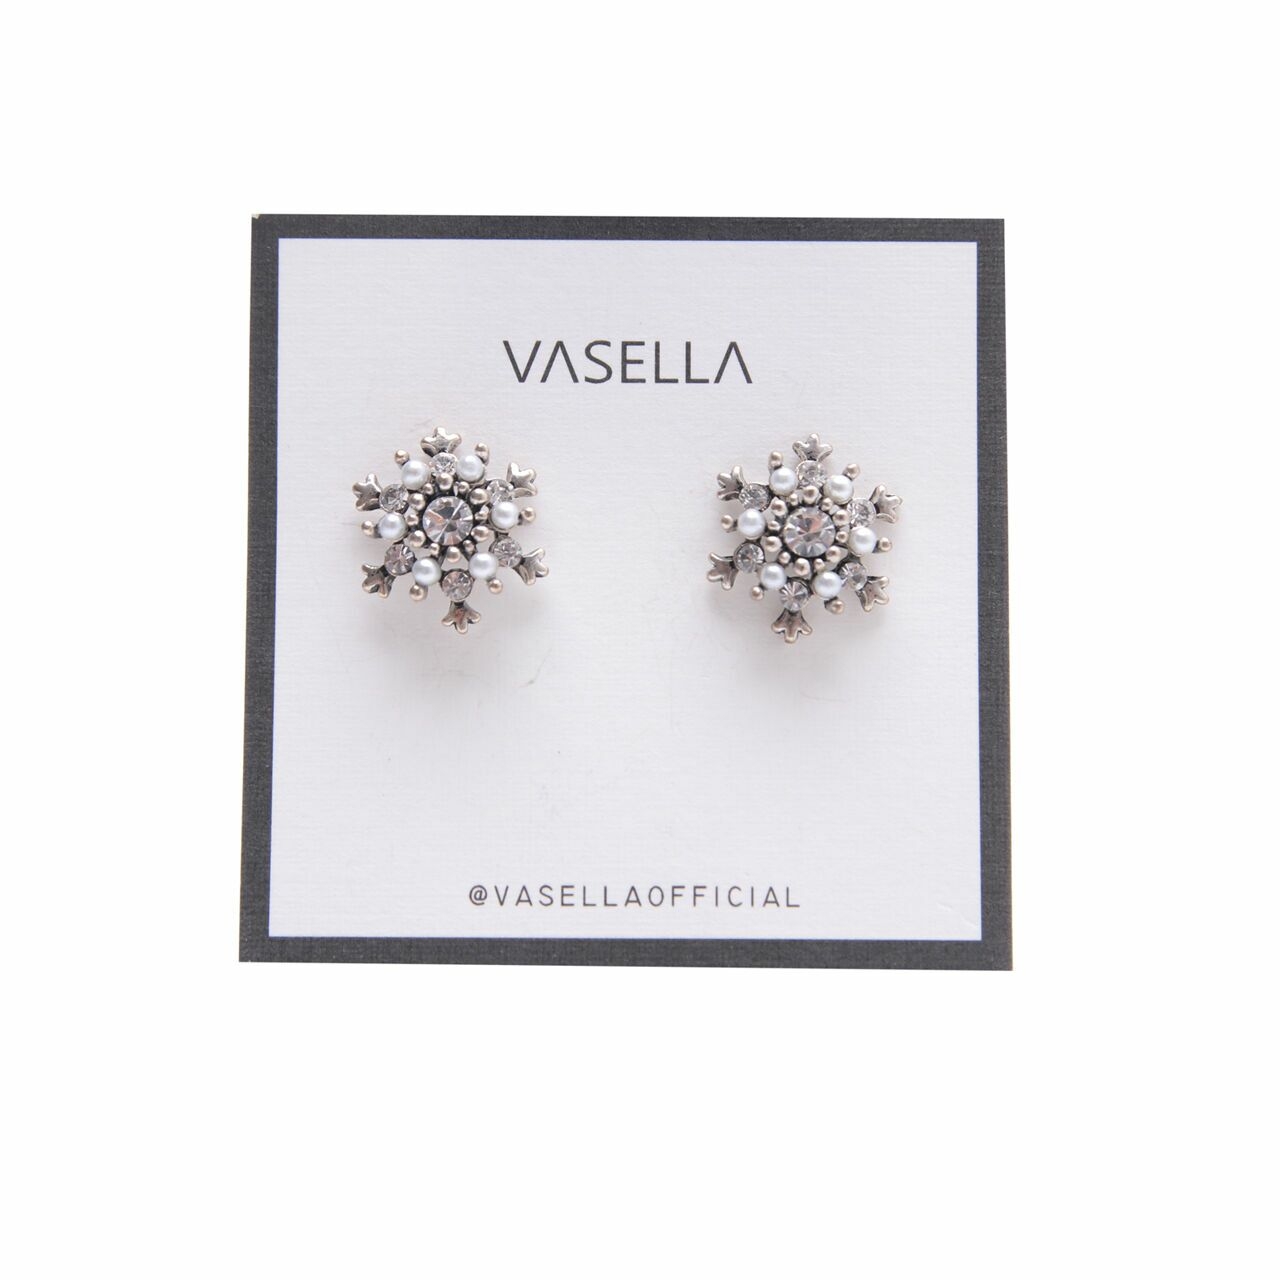 Vasella Silver Jewelry